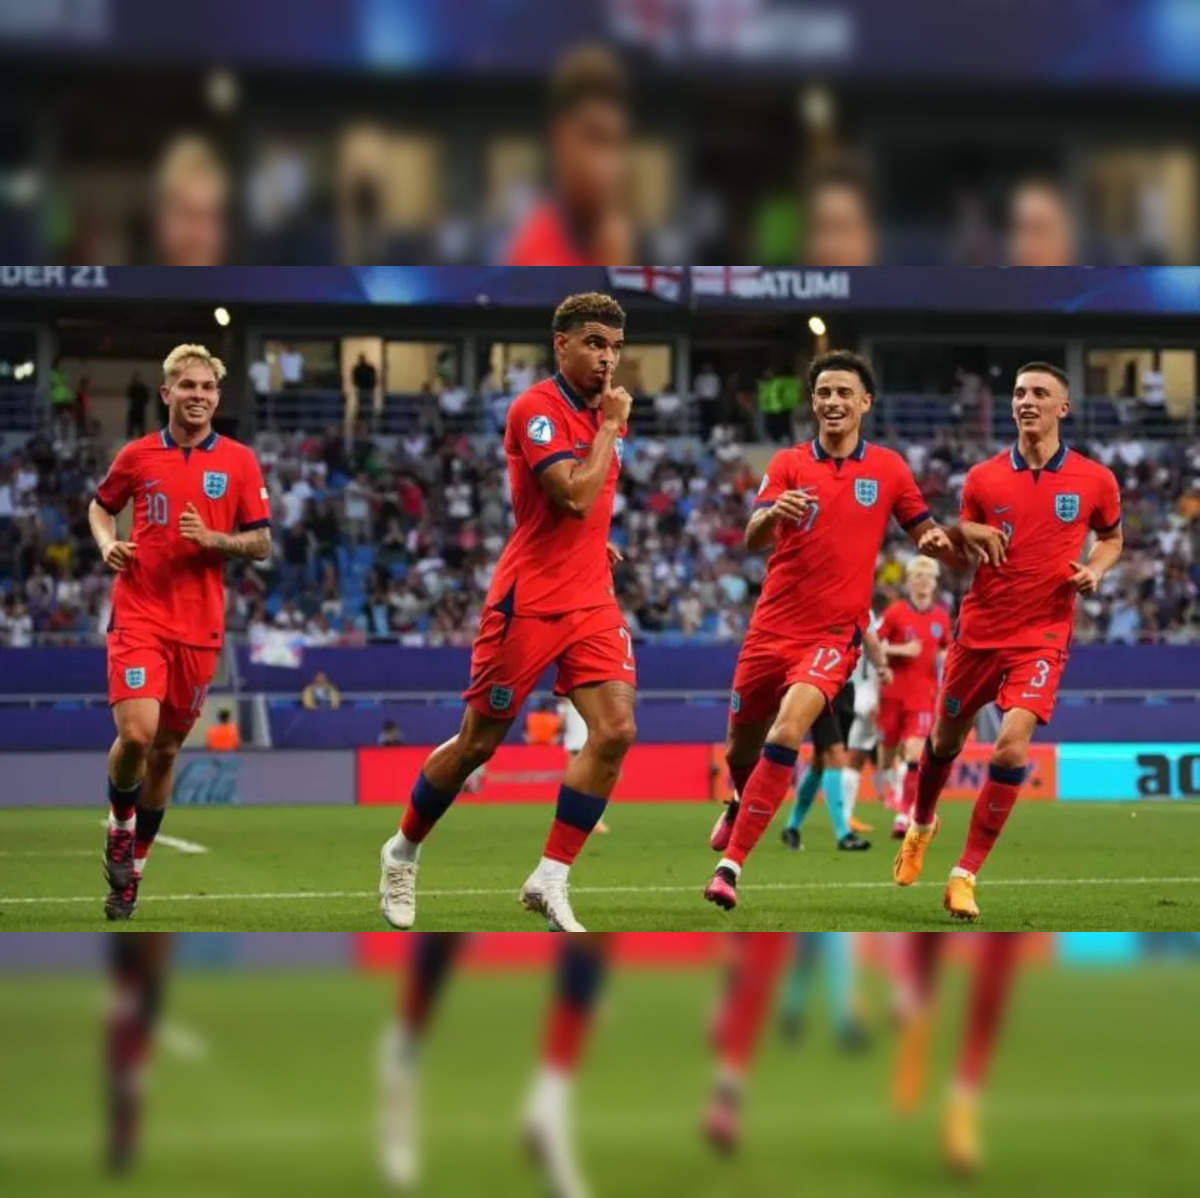 Spain v England, Final, Augmented Feed Live Stream